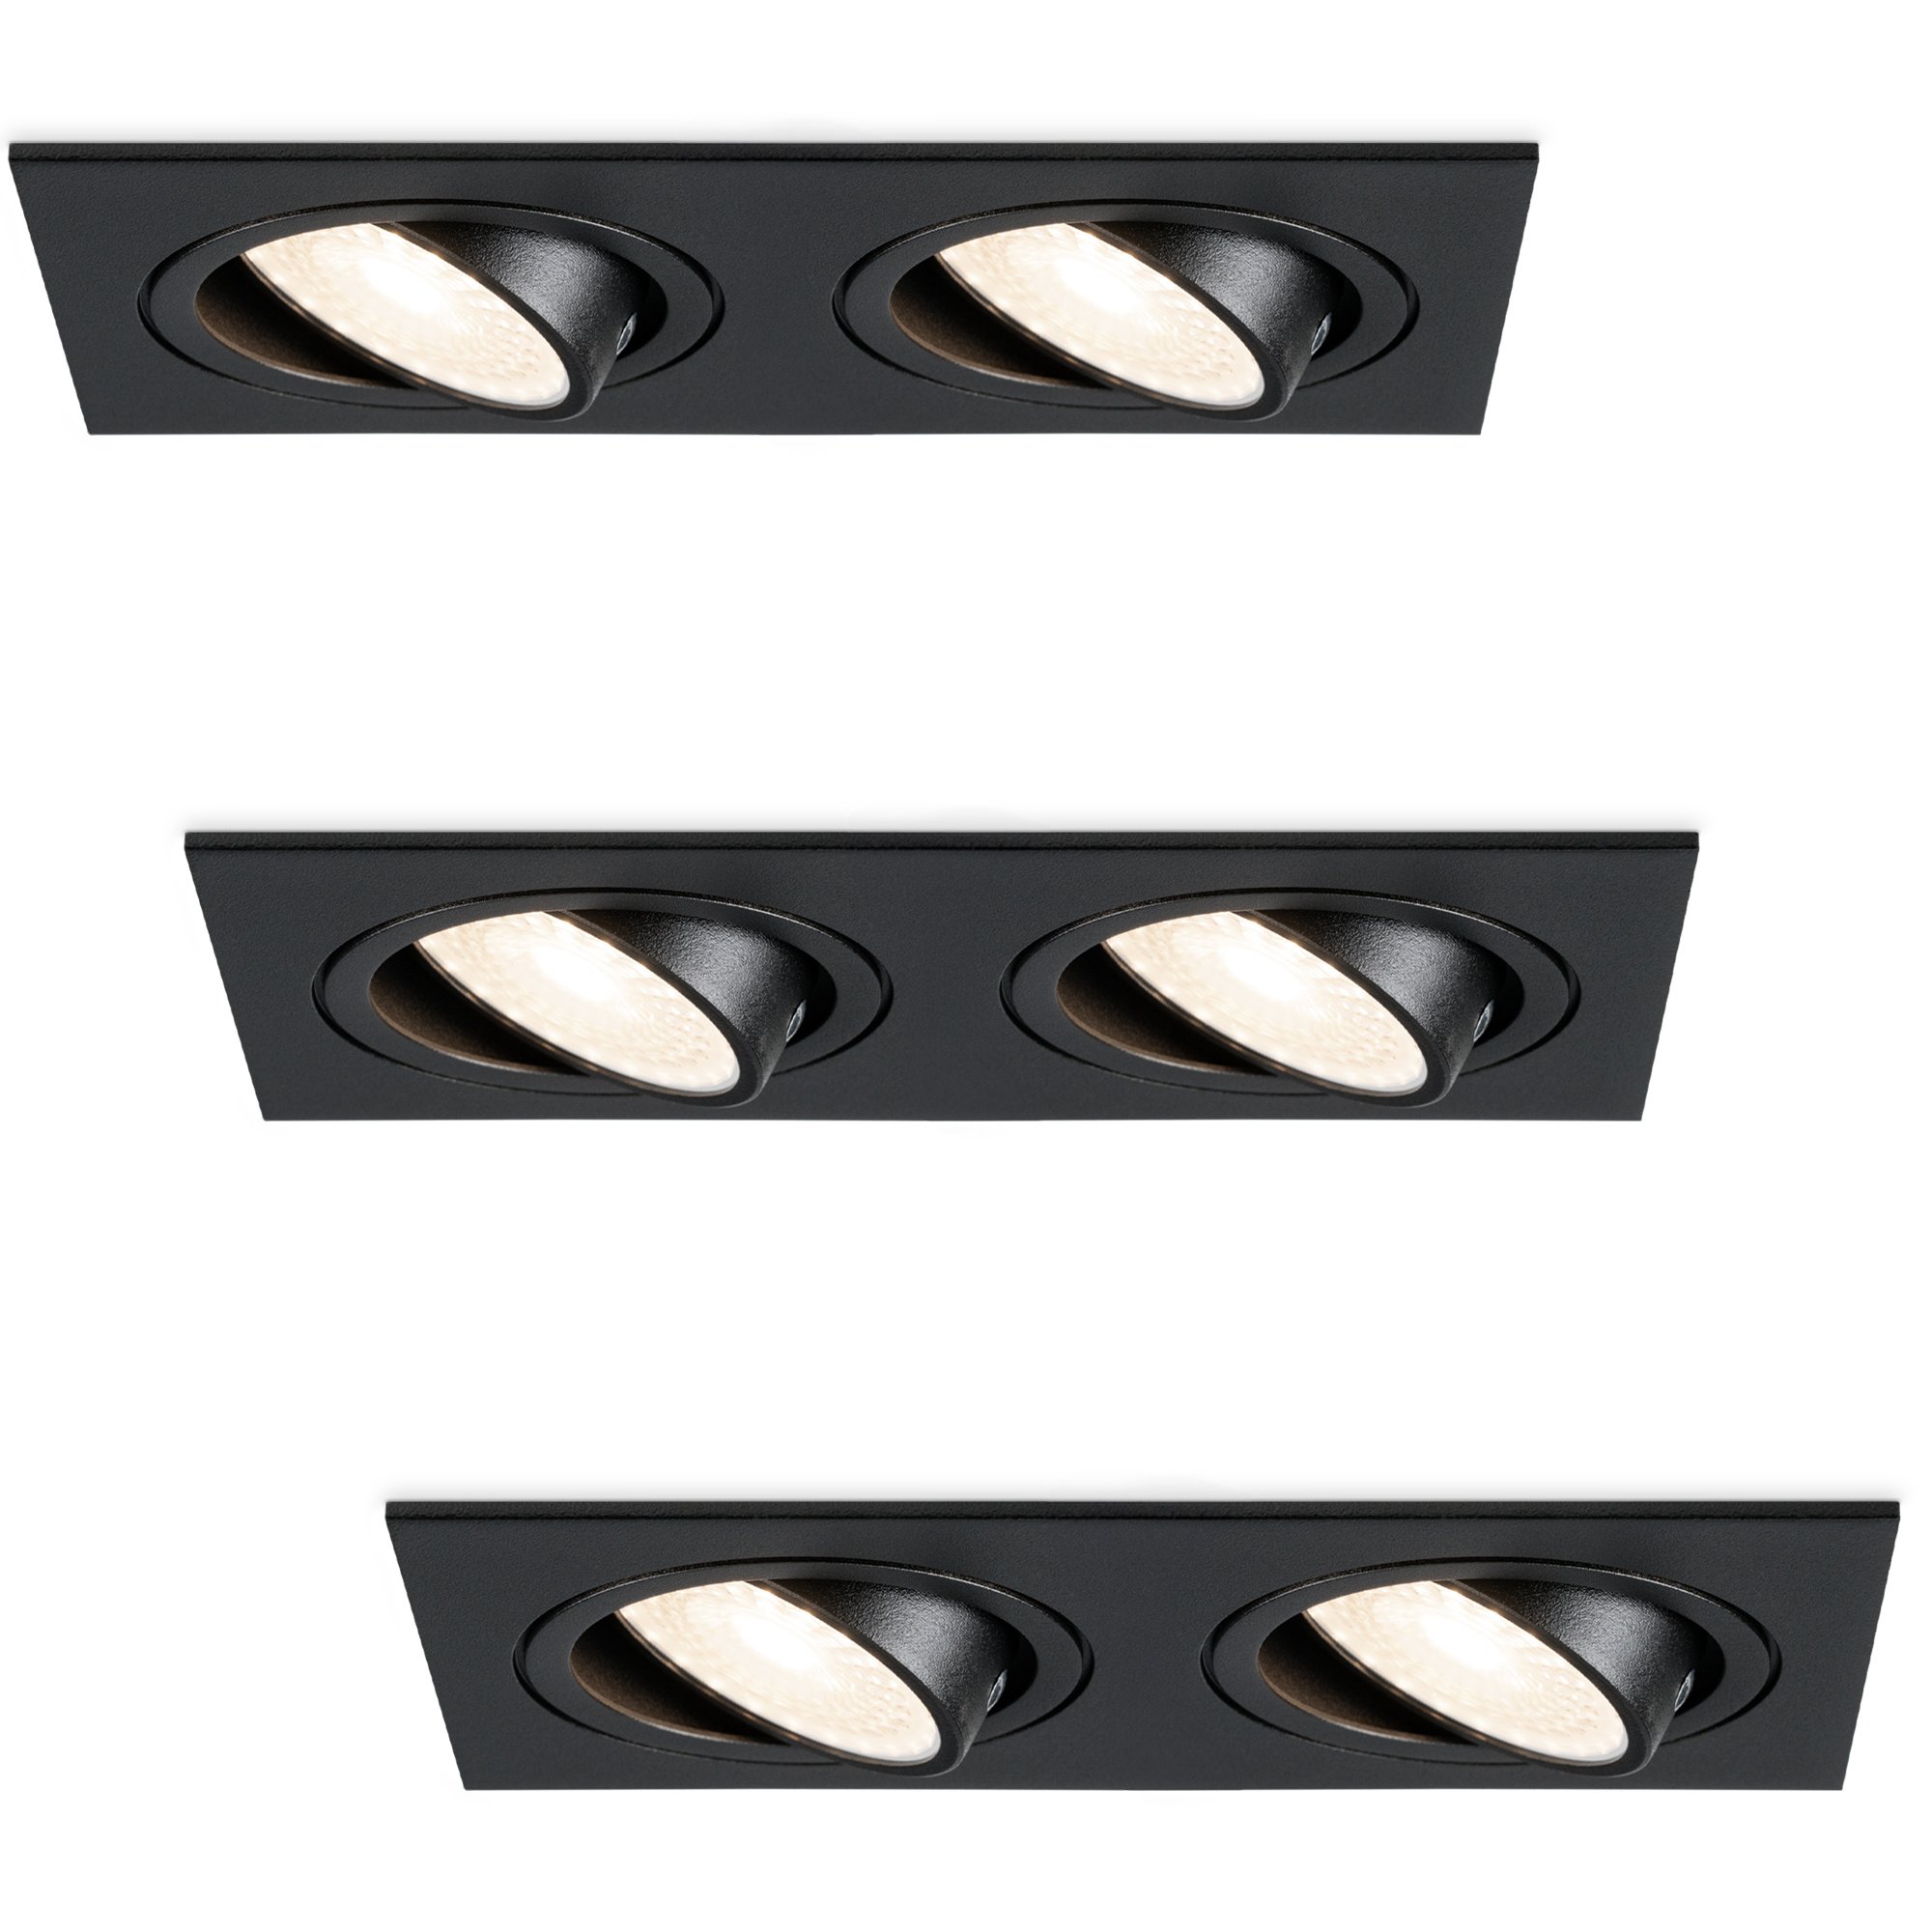 HOFTRONIC™ Set van 3 Mallorca dubbele LED inbouwspots vierkant – Kantelbaar – 4000K Neutraal wit – GU10 – 5 Watt – Rechthoekig – GU10 verwisselbare lichtbron – Plafondspot voor binnen – Zwart Bestellen via ledinbouwverlichting